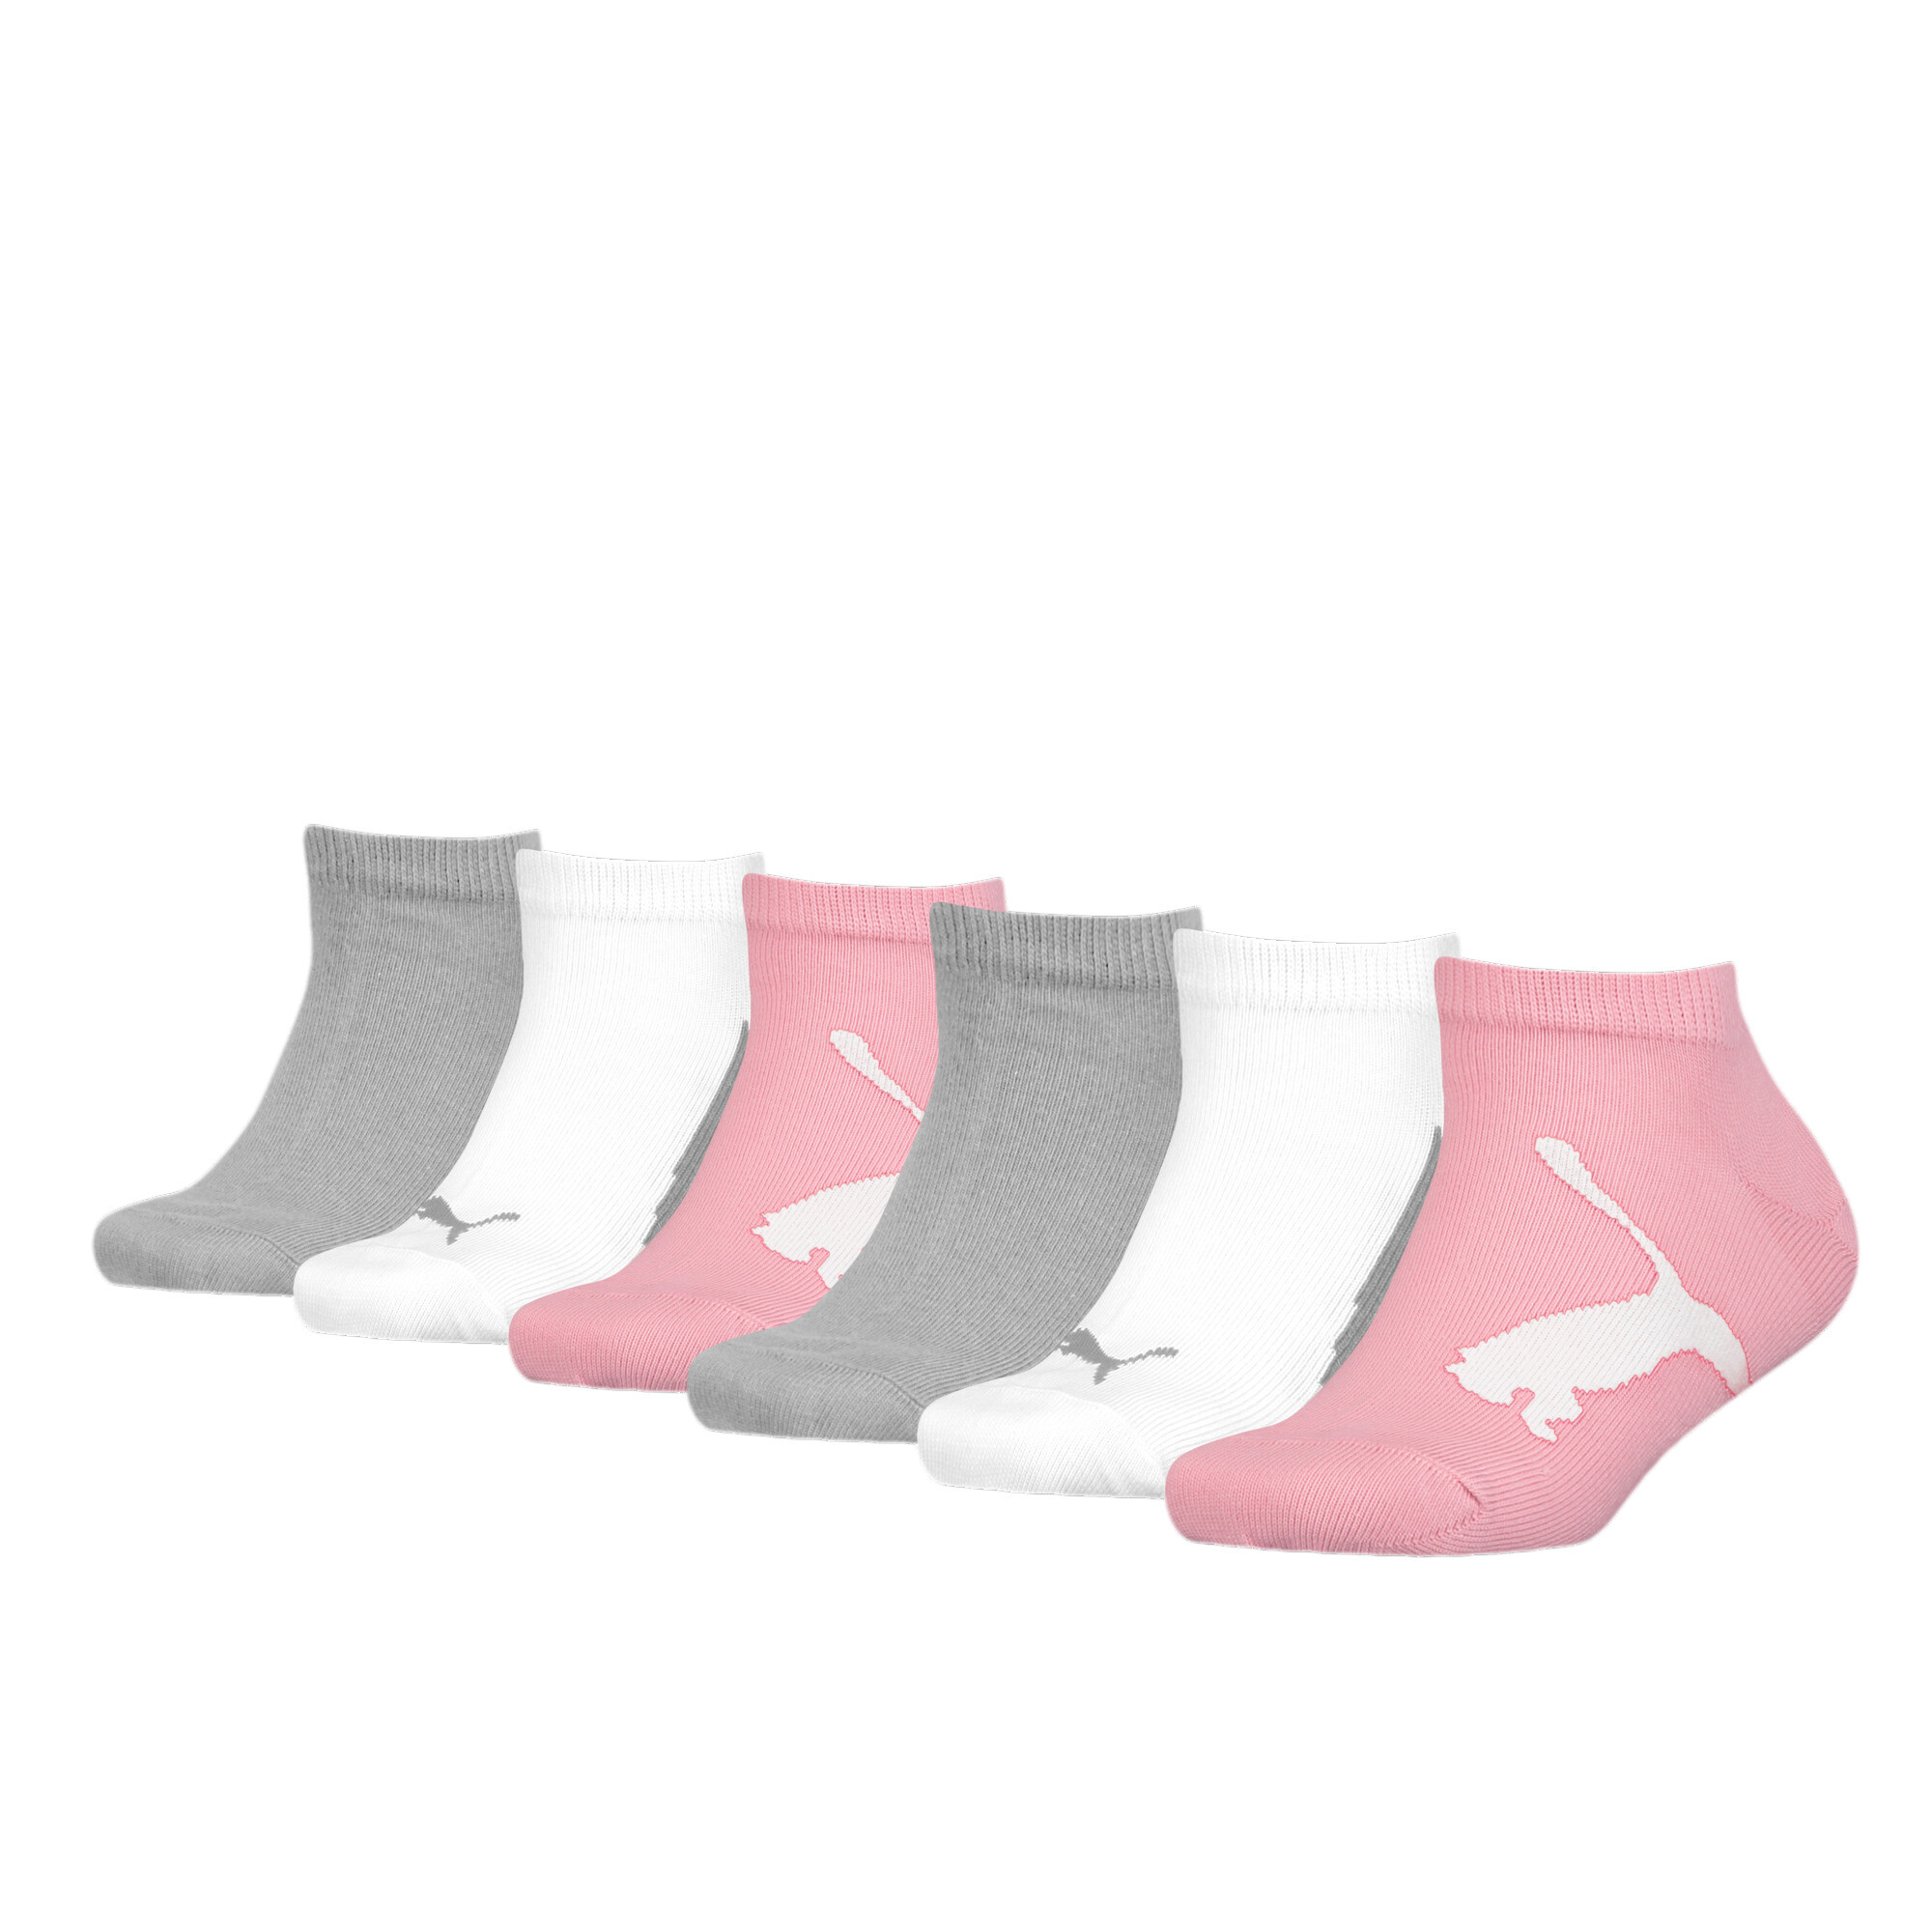 Puma Kids BWT Sneaker Socks 6 Pack, Pink, Size 31-34, Clothing